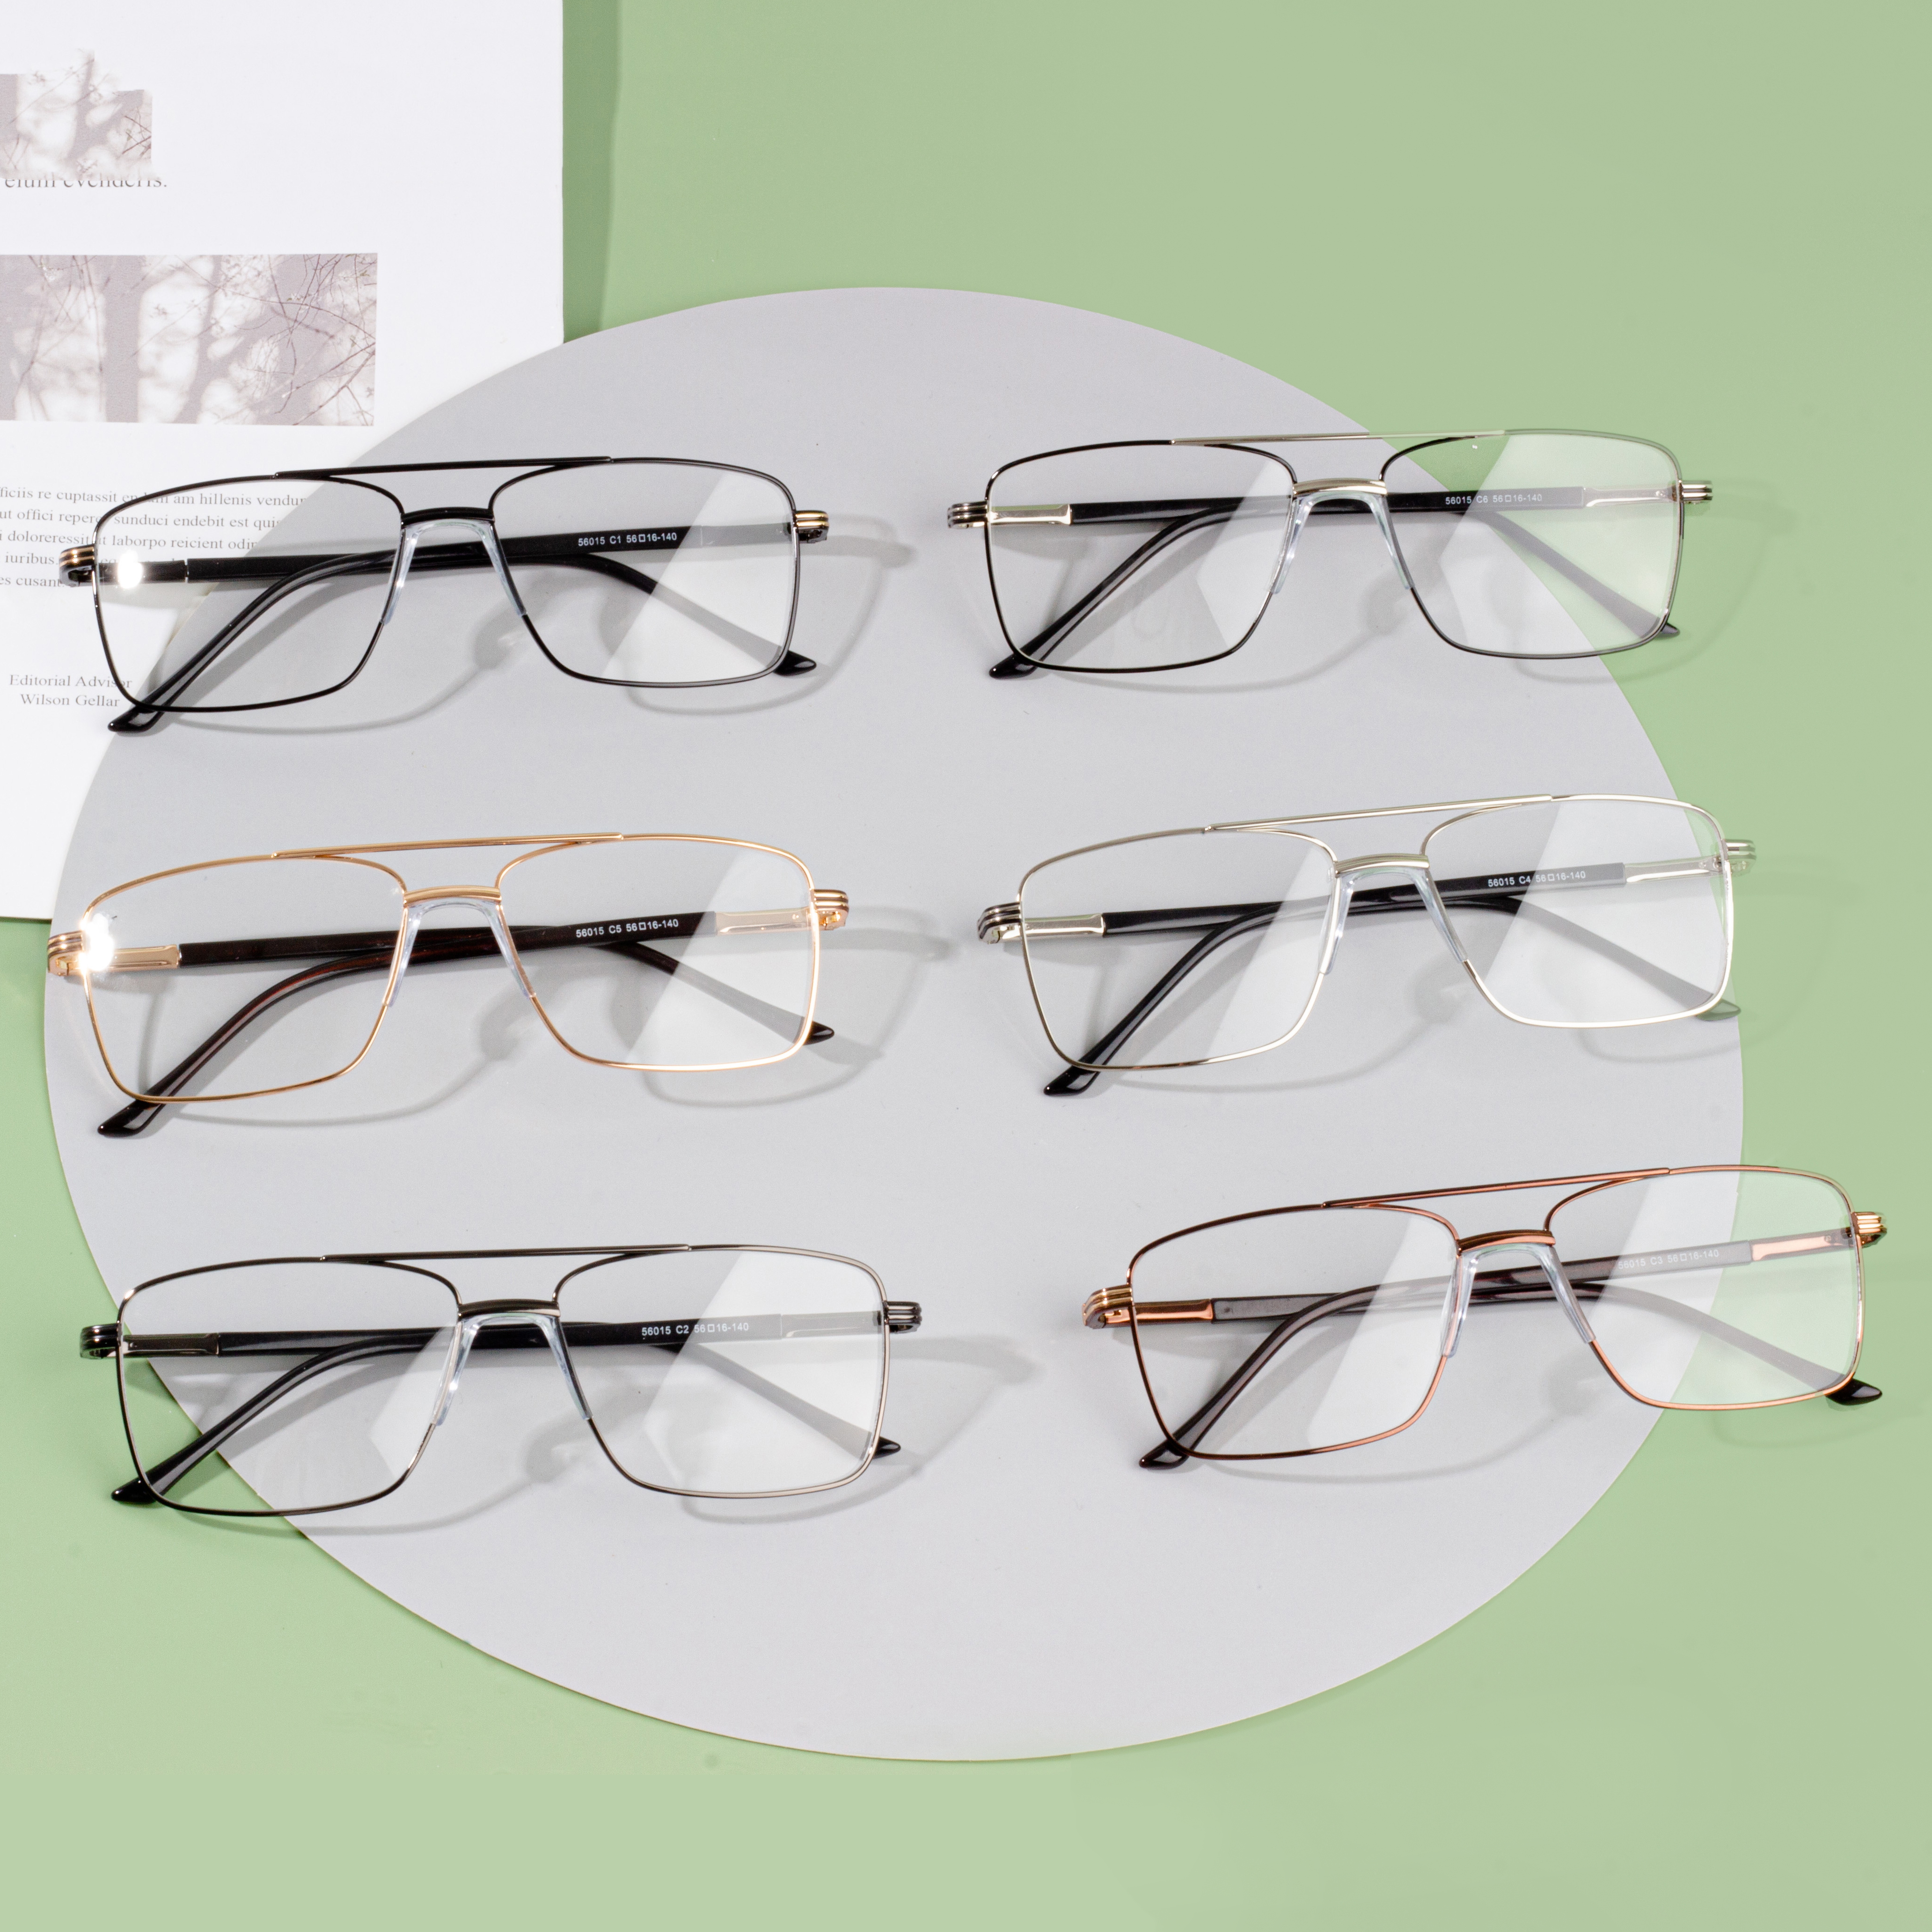 metal framed glasses